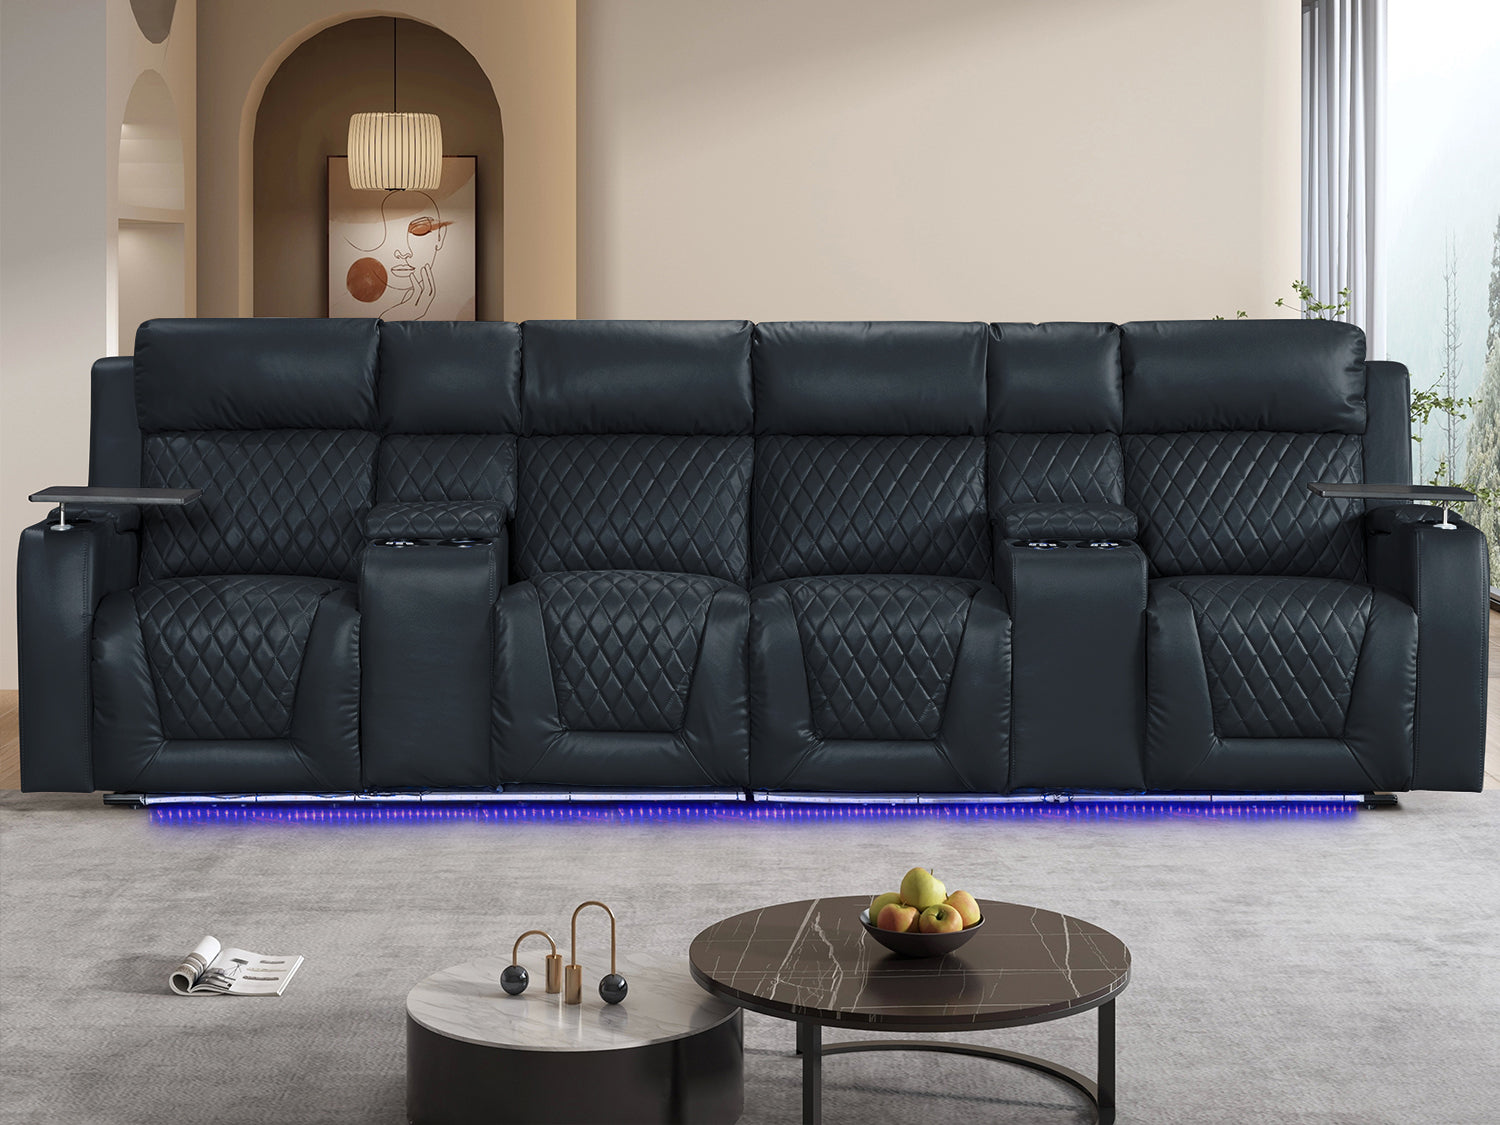 Modular Corner Recliner Sofas: Customize Comfort & Style